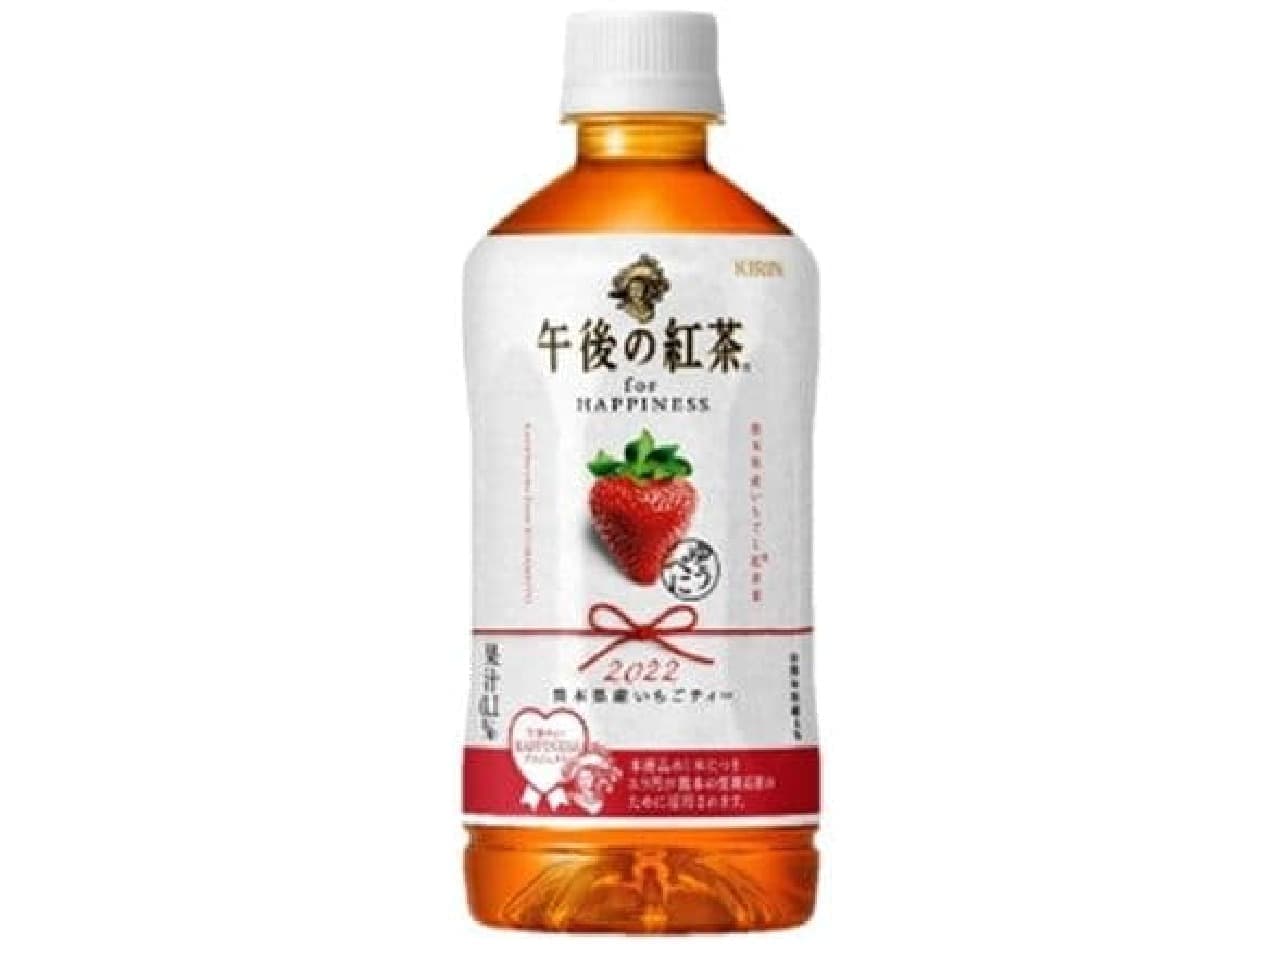 Kirin Afternoon Tea for HAPPINESS Kumamoto Strawberry Tea